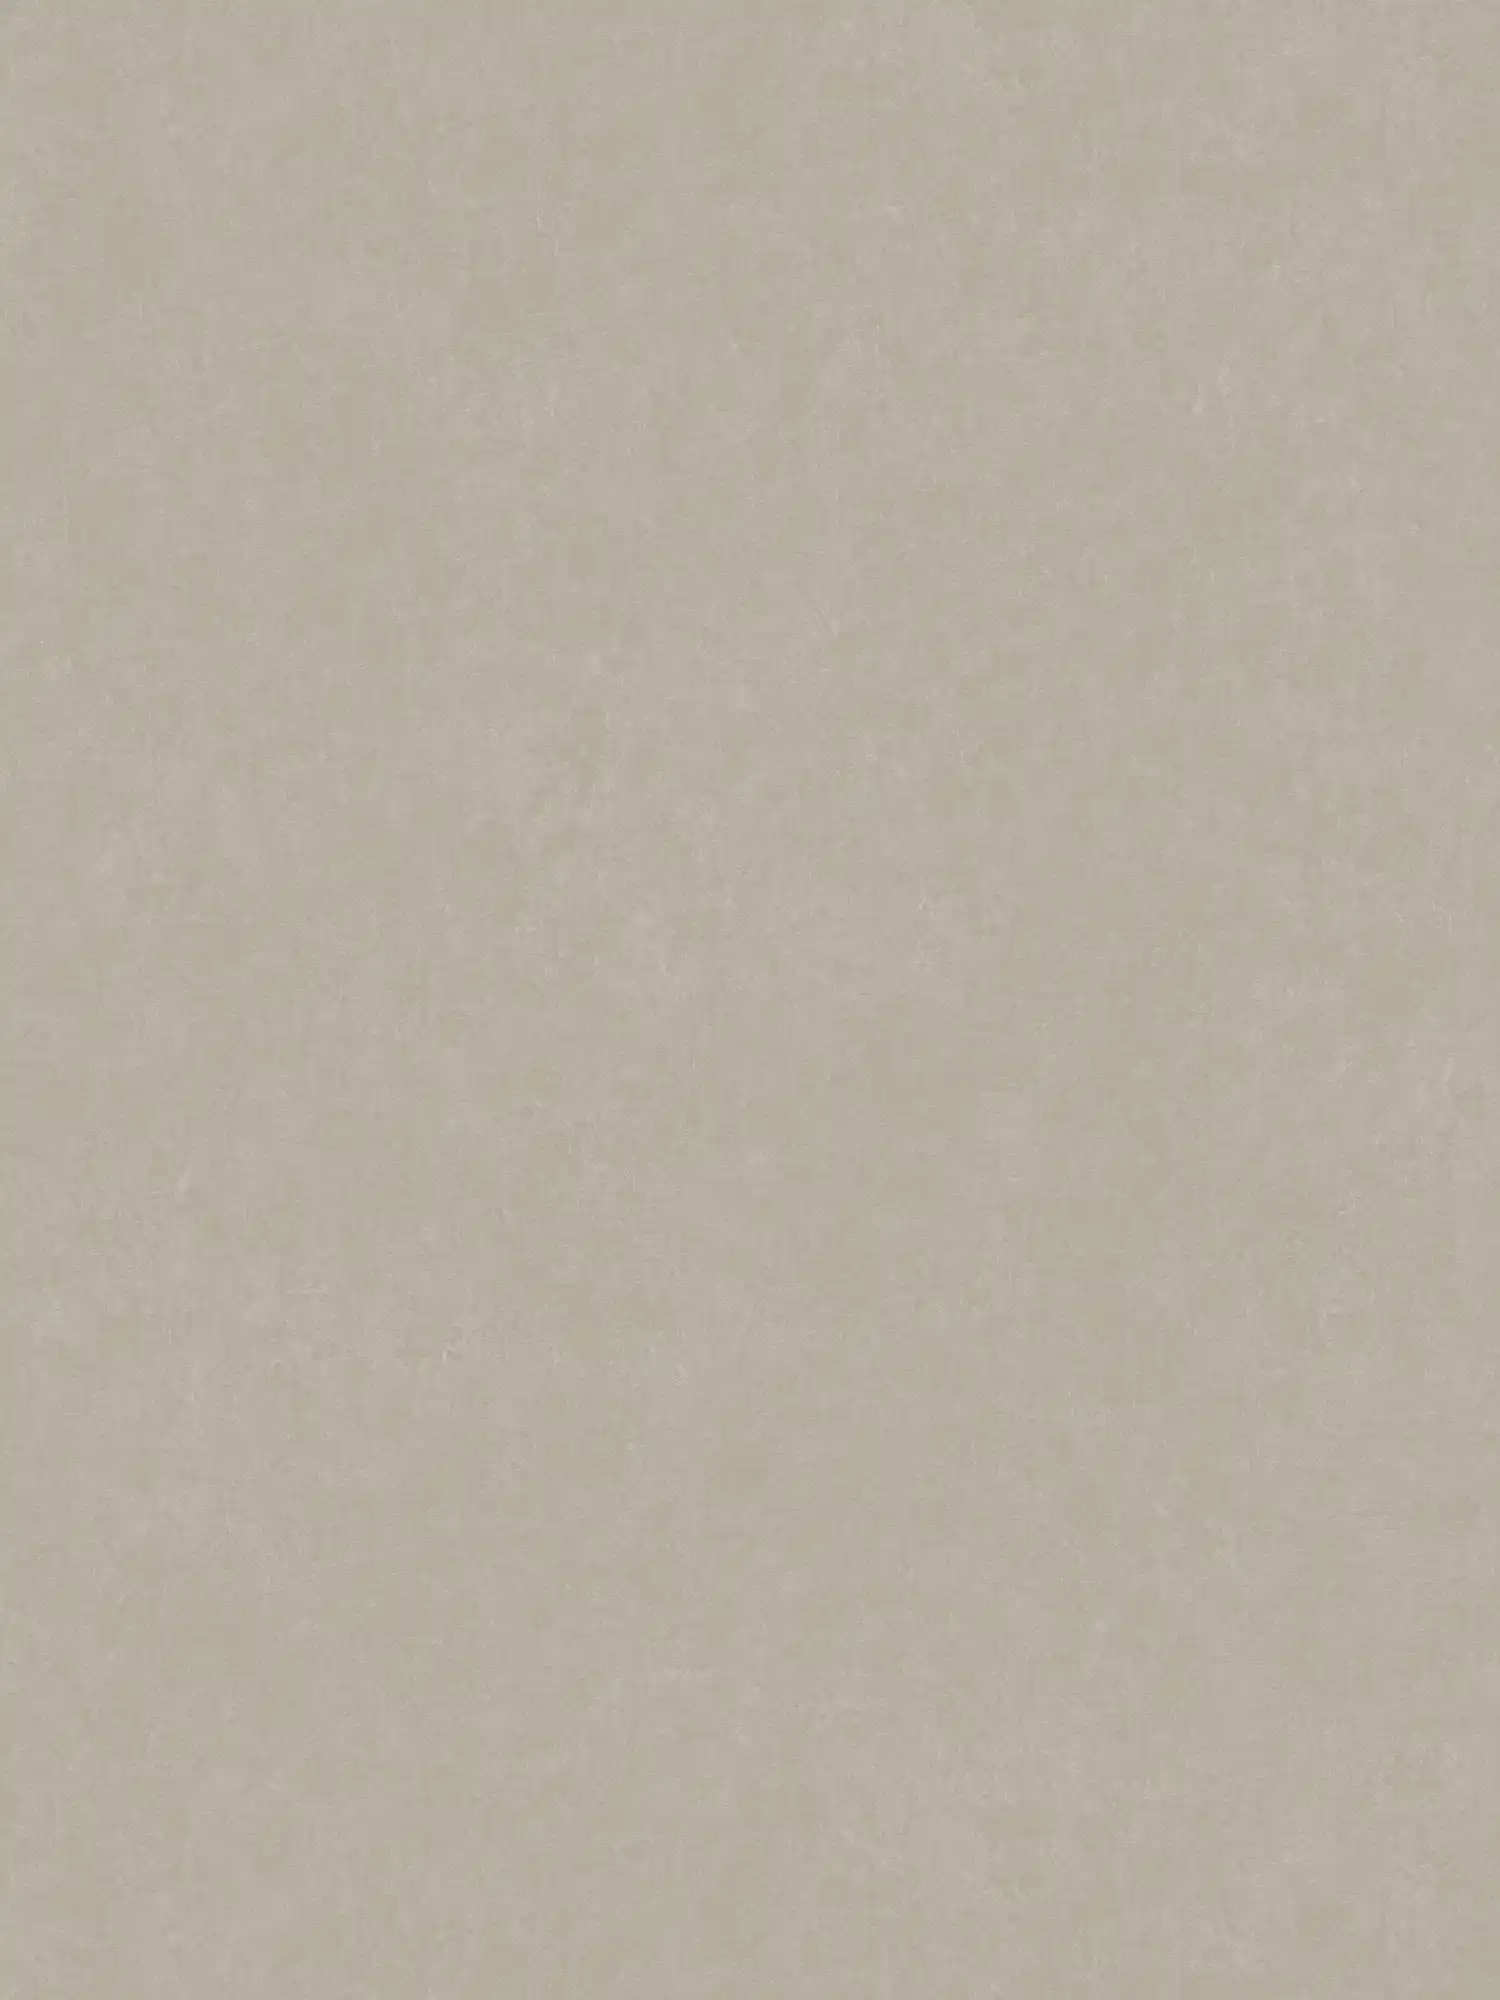 Grey beige wallpaper plain with texture design
